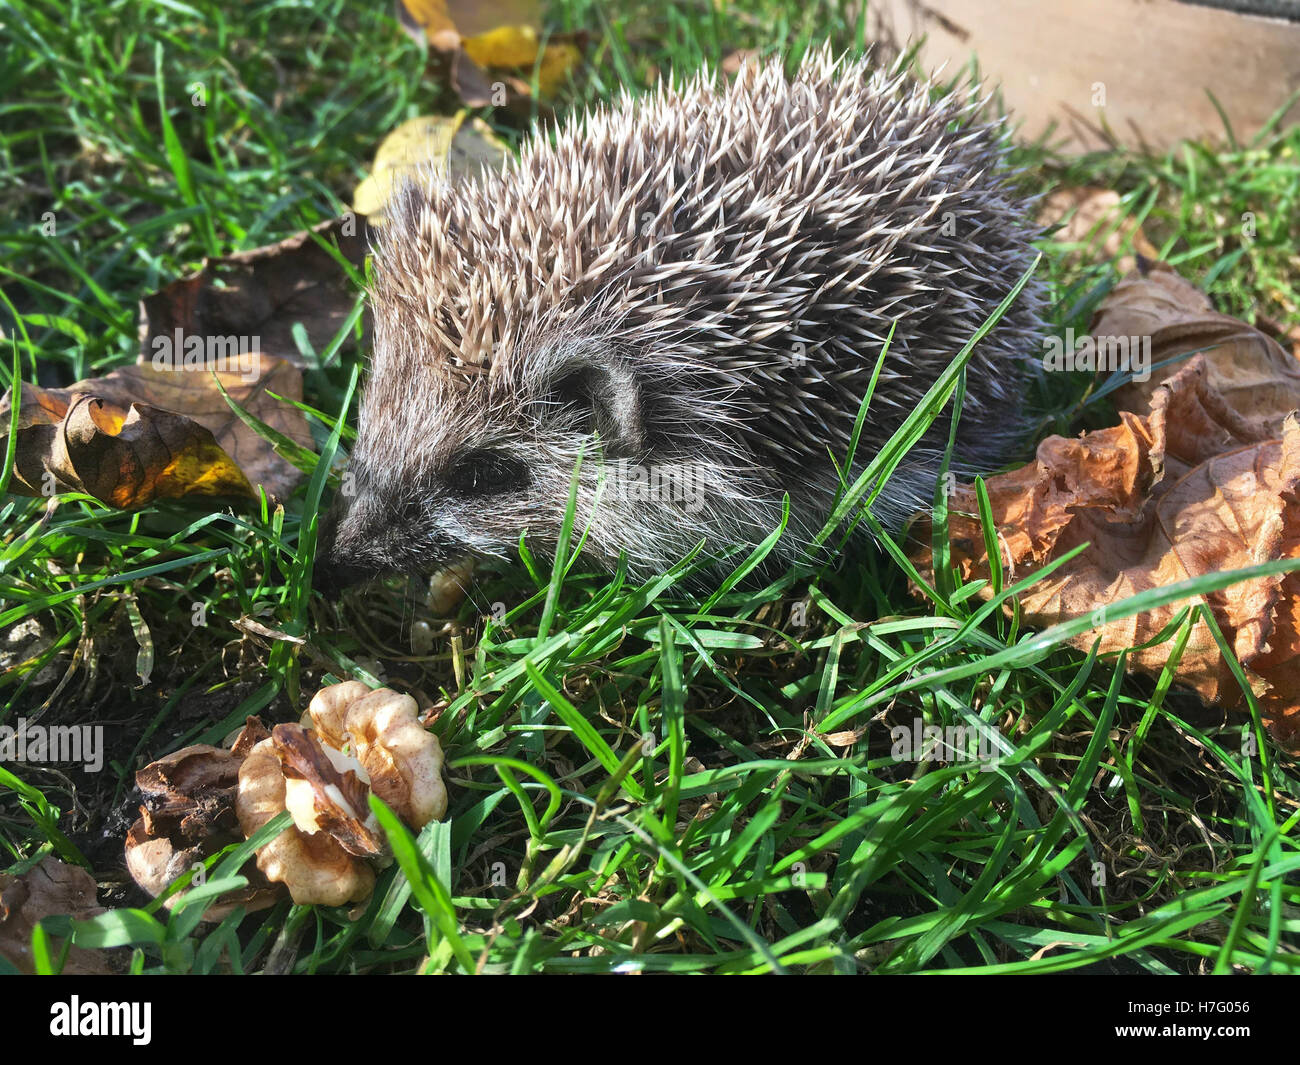 Hedgehog eats walnut in grass with fallen leaves Stock Photo